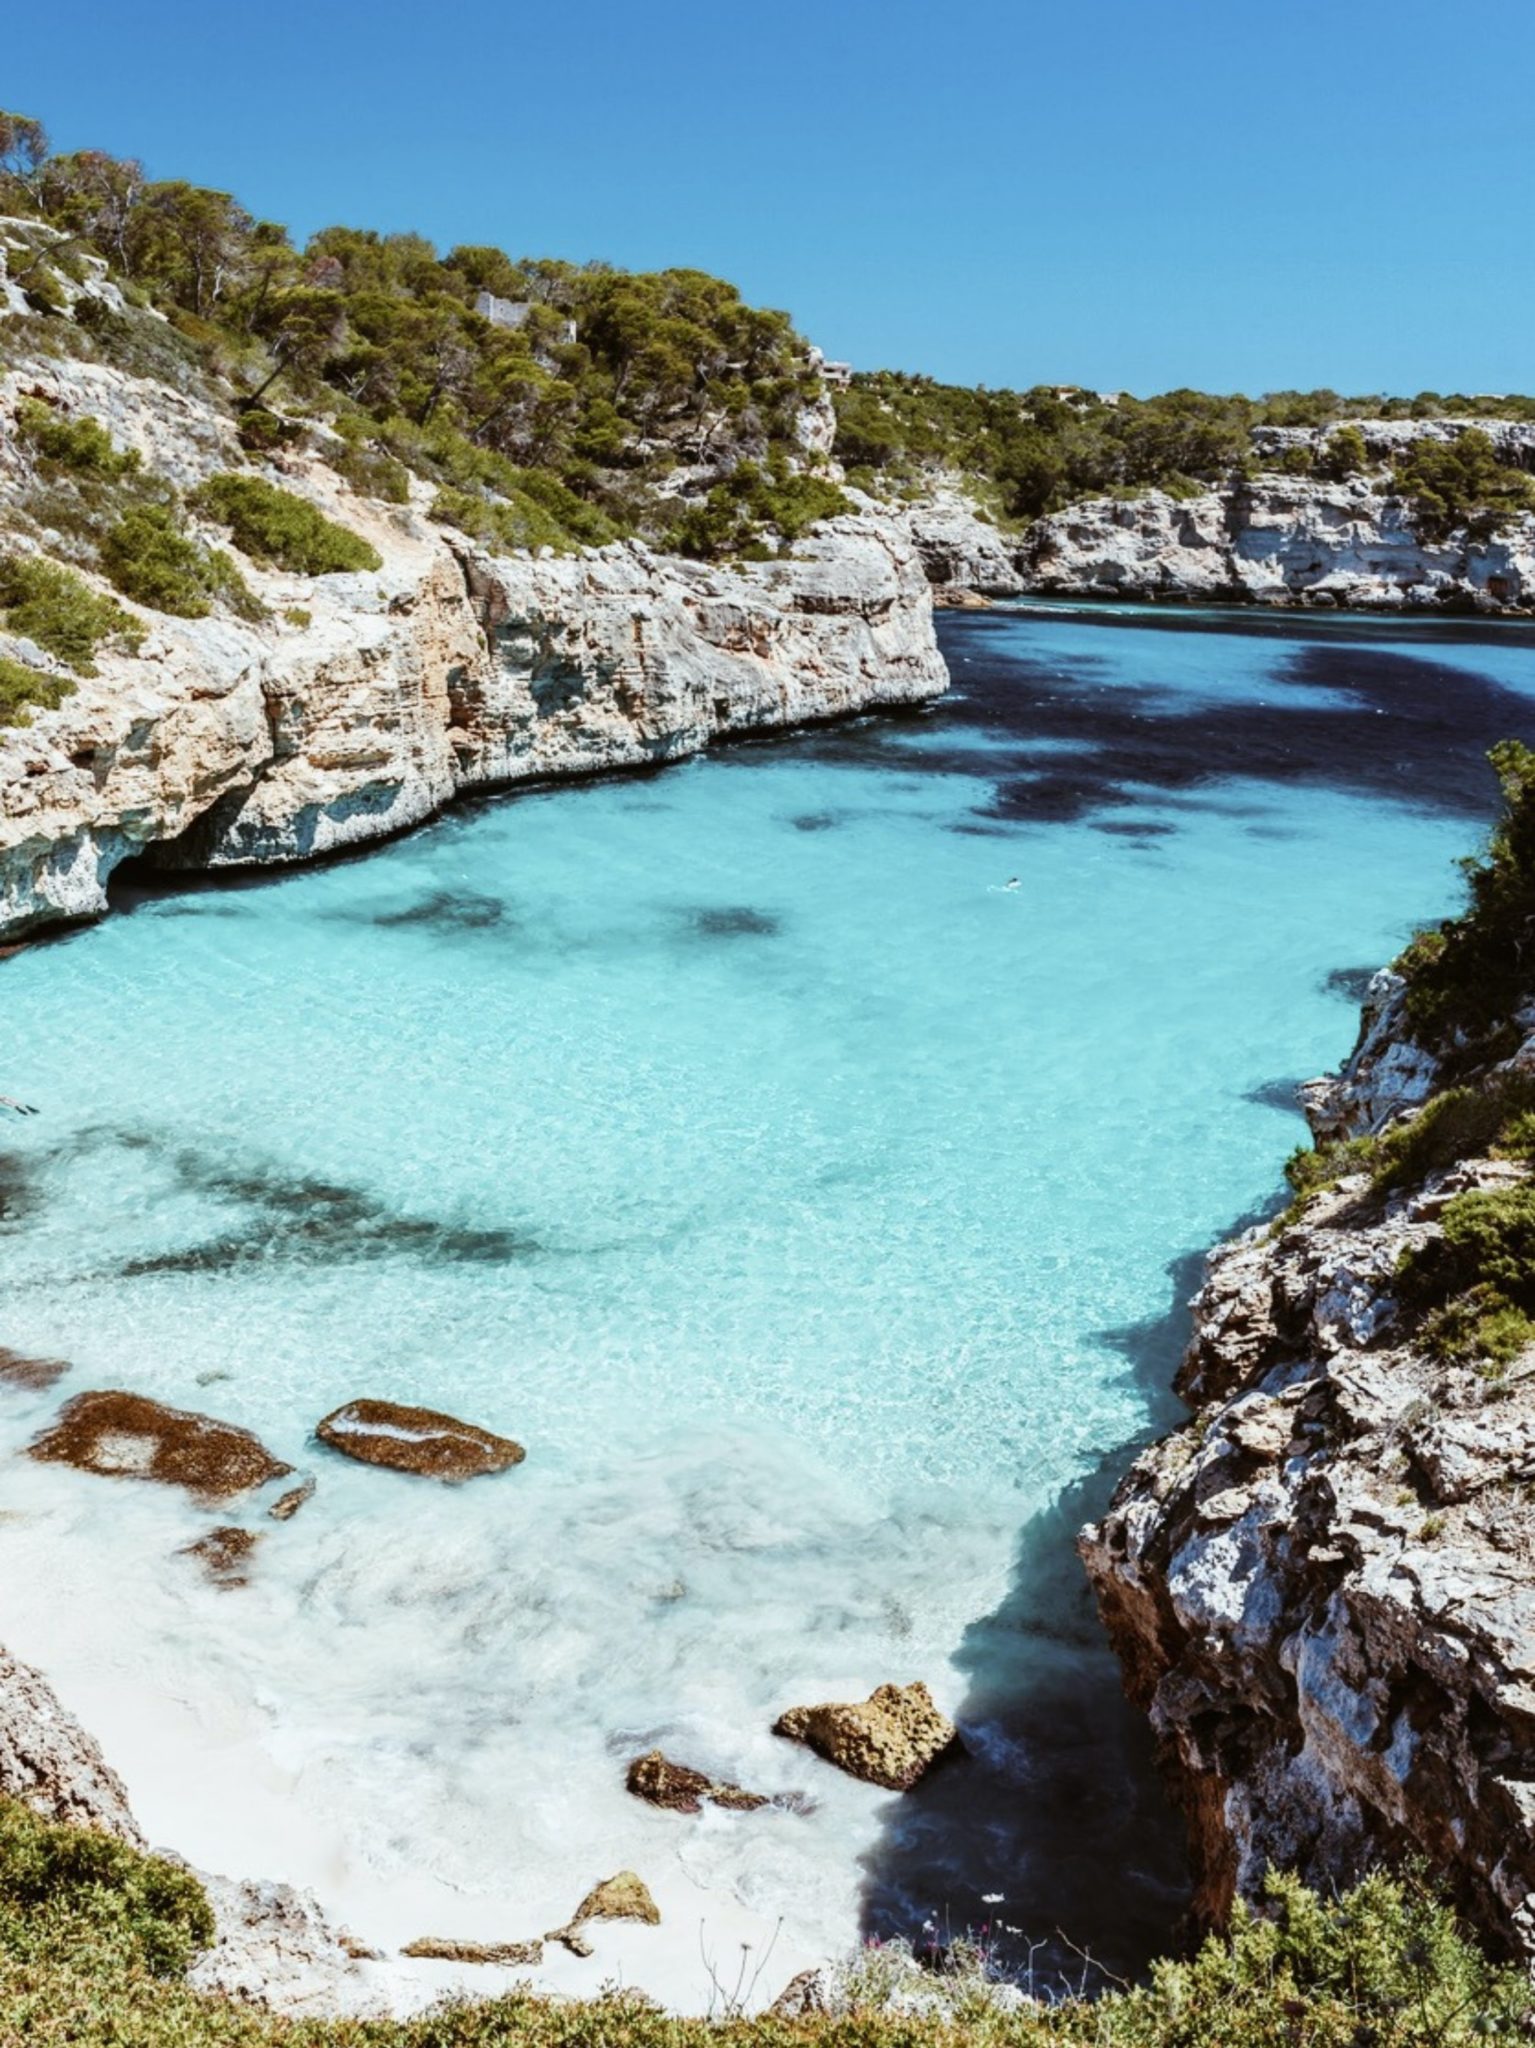 Beautiful beach scenery in Mallorca, Spain